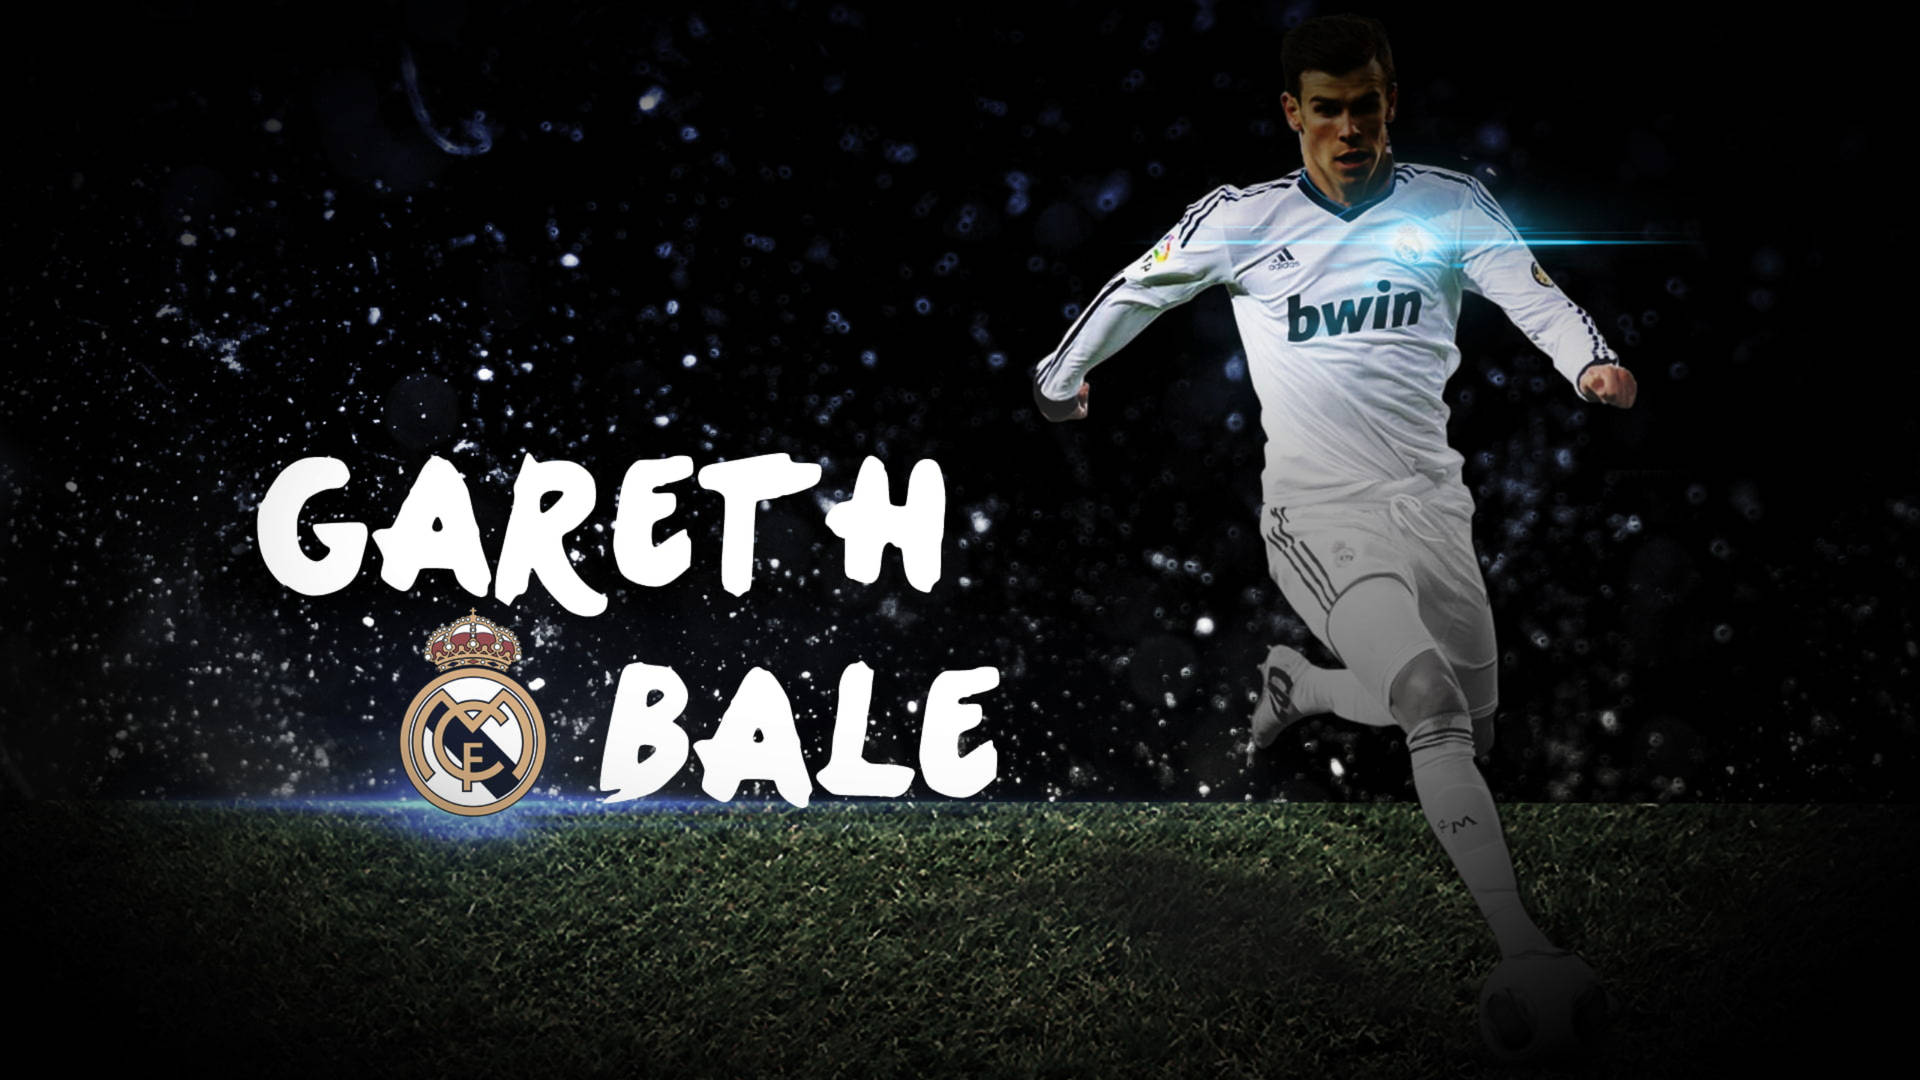 Gareth Bale In Field Cover Background